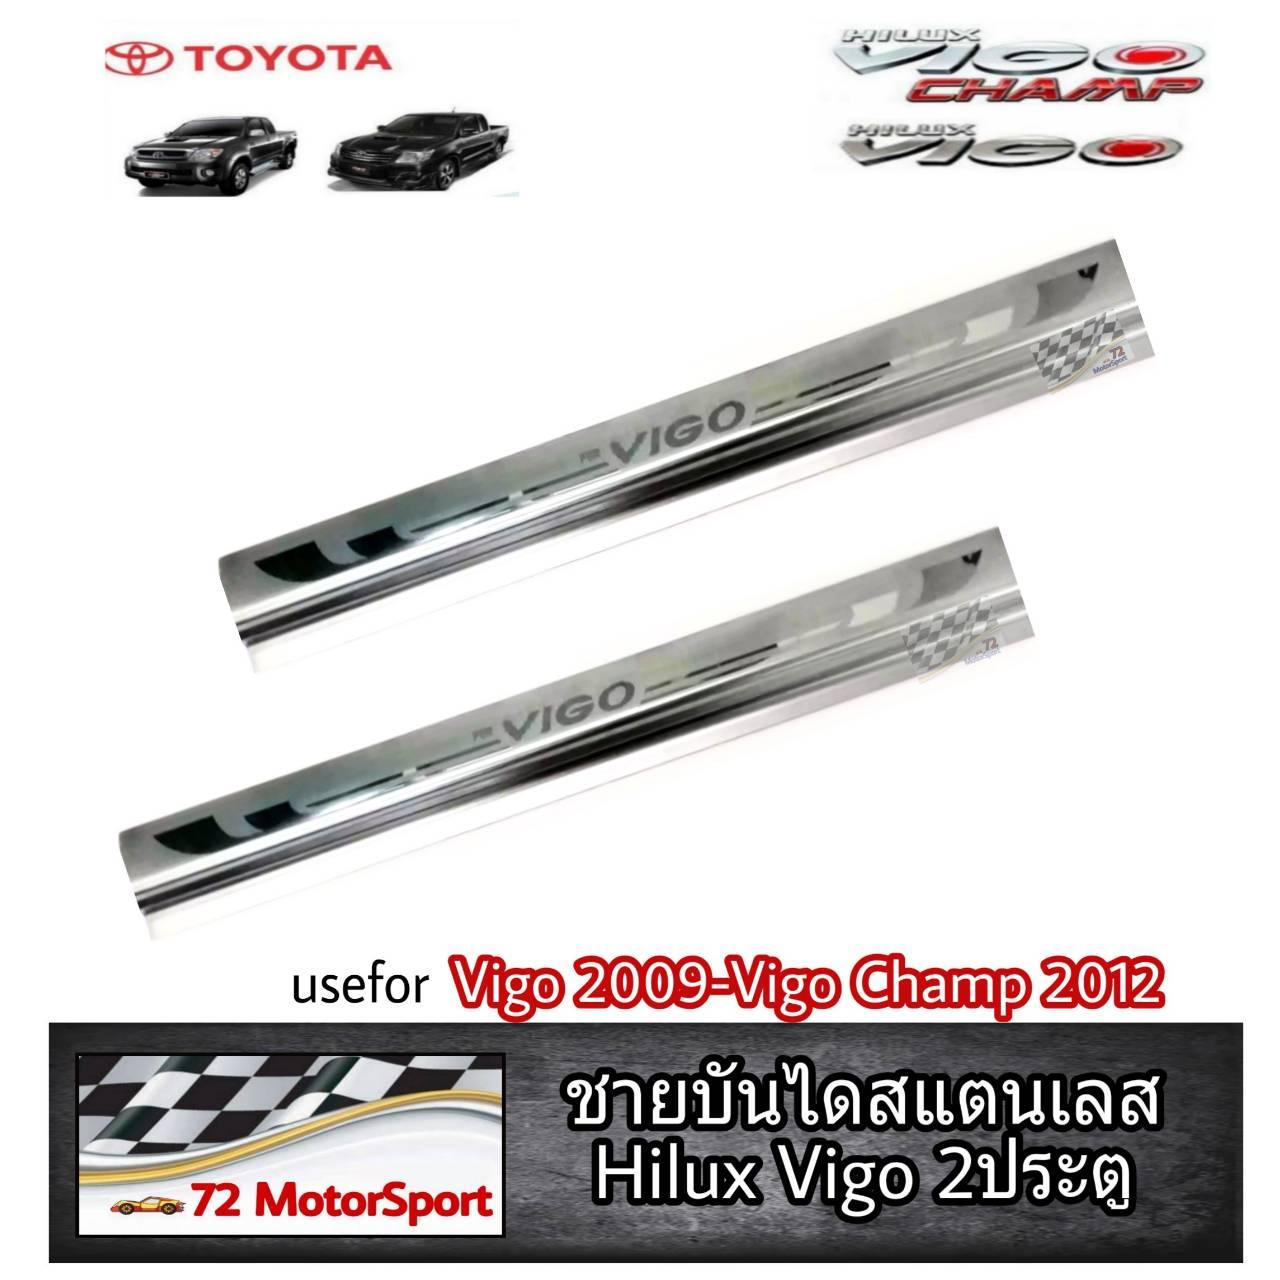 Toyota Vigo ชายบันไดสแตนเลสแท้ 2 ประตู กันรอยประตูวีโก้ กาบบันได สครับเพลท scuffplate วีโก้แชมป์ vigo champ